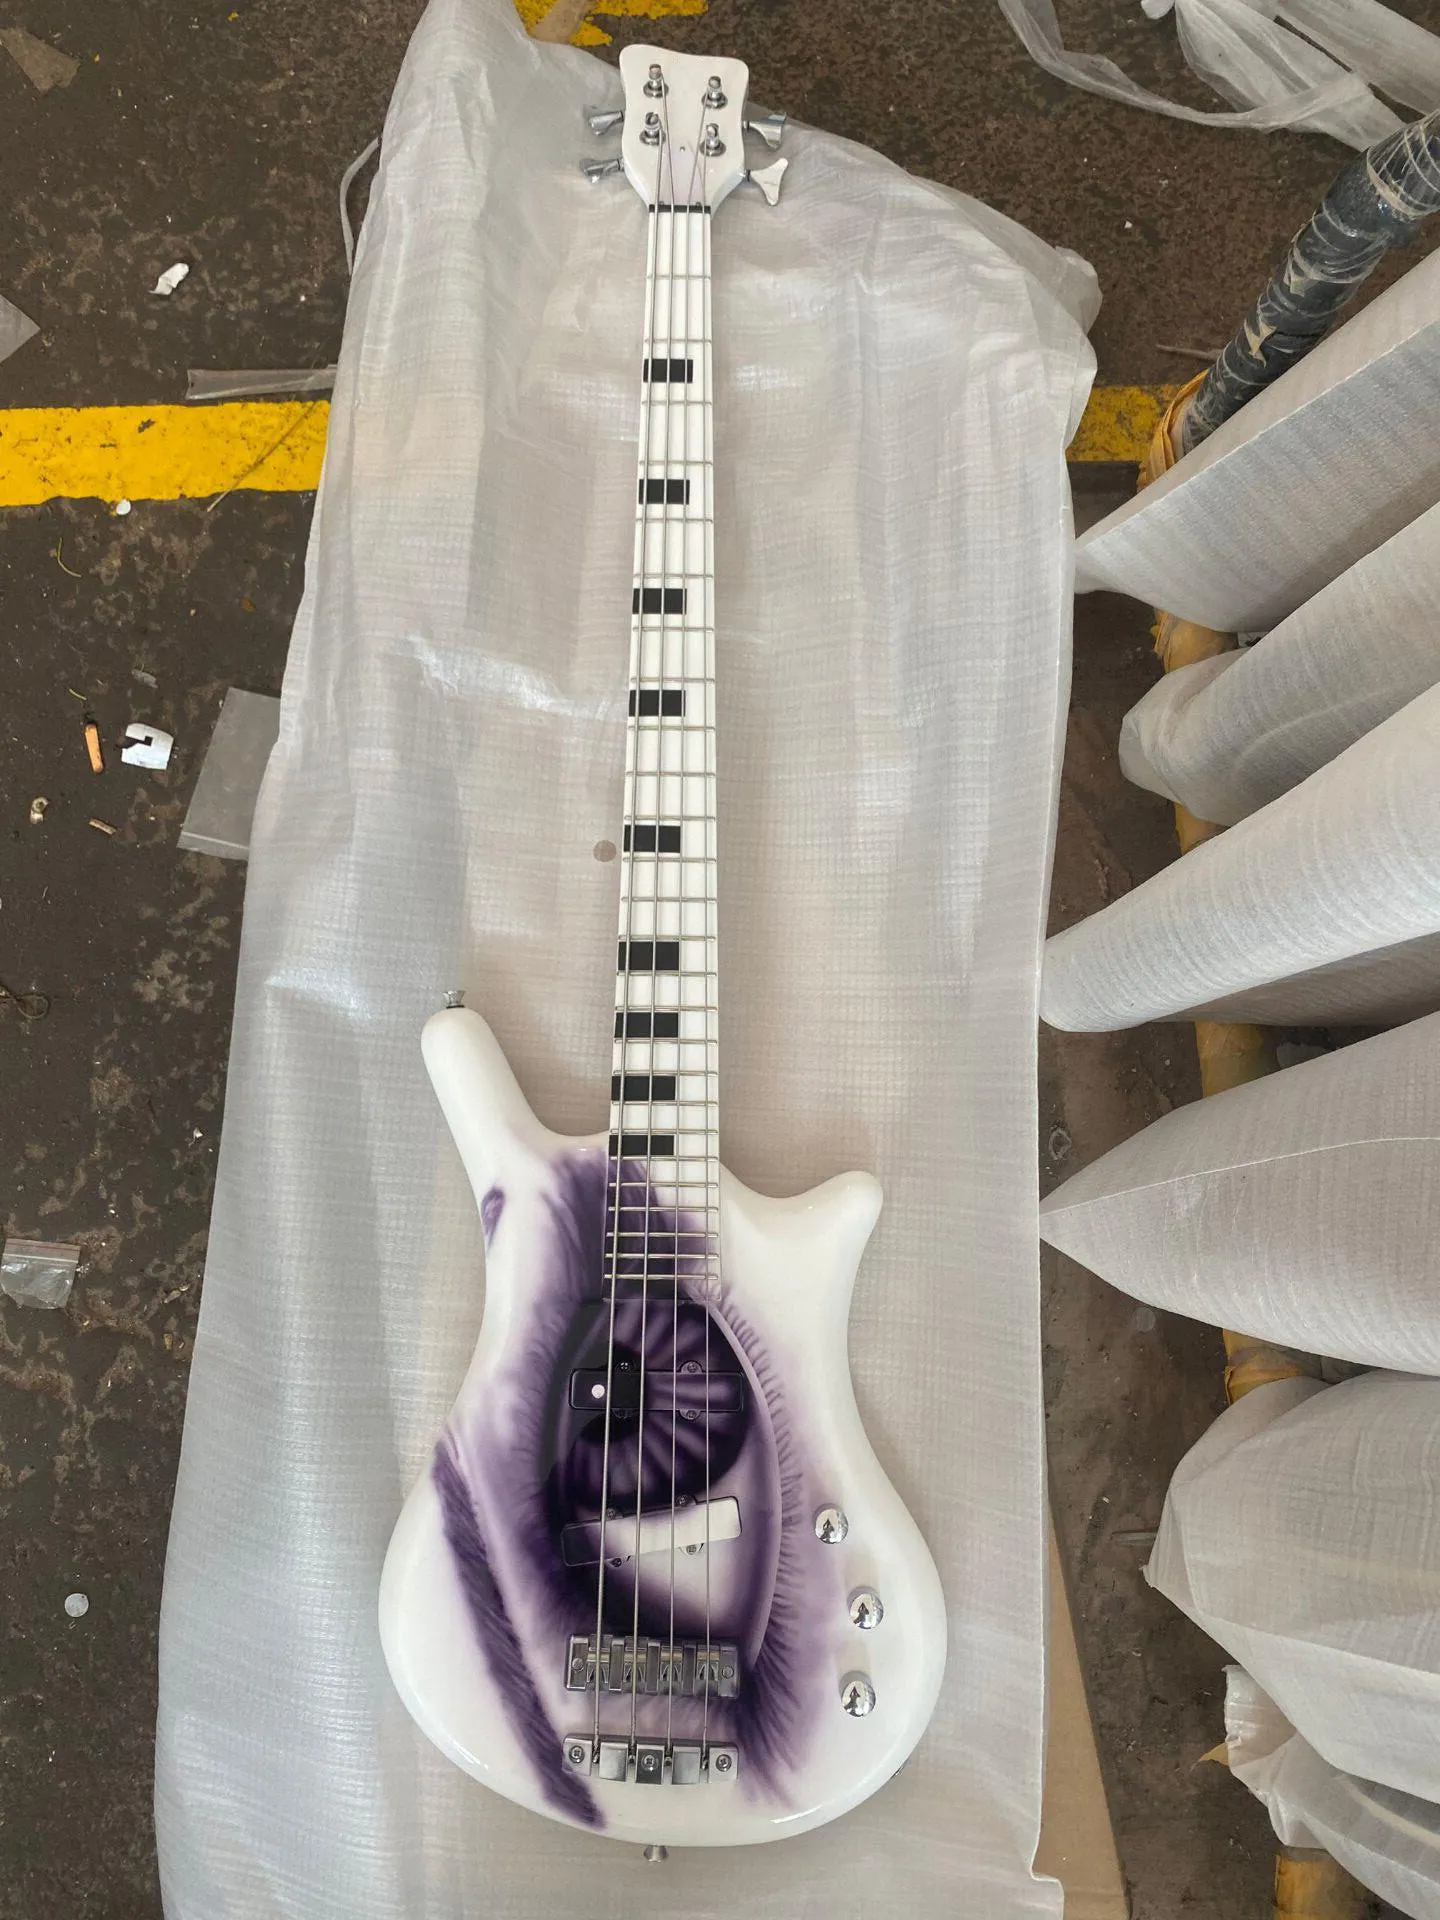 Sällsynta Custom 4 strängsymbol One Eye White Electric Bass Guitar, 100% Handgjorda 26 Frets Black Block Inlay Chrome Hardware